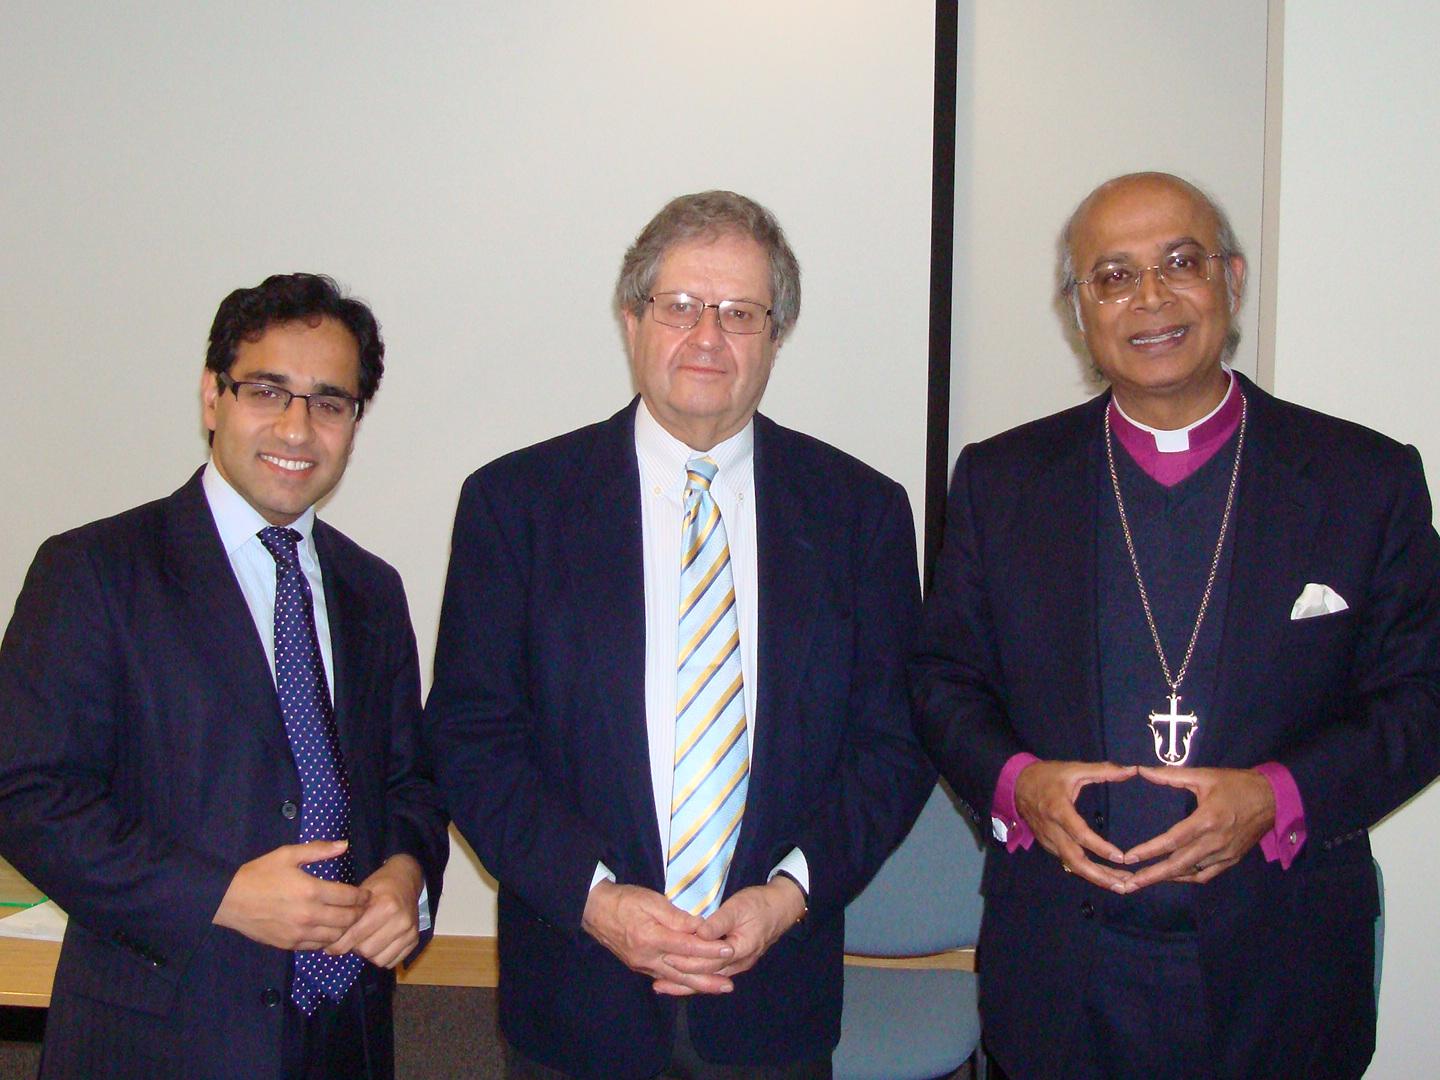 Bishop Michael Nazir-Ali and Rehman Chishti MP